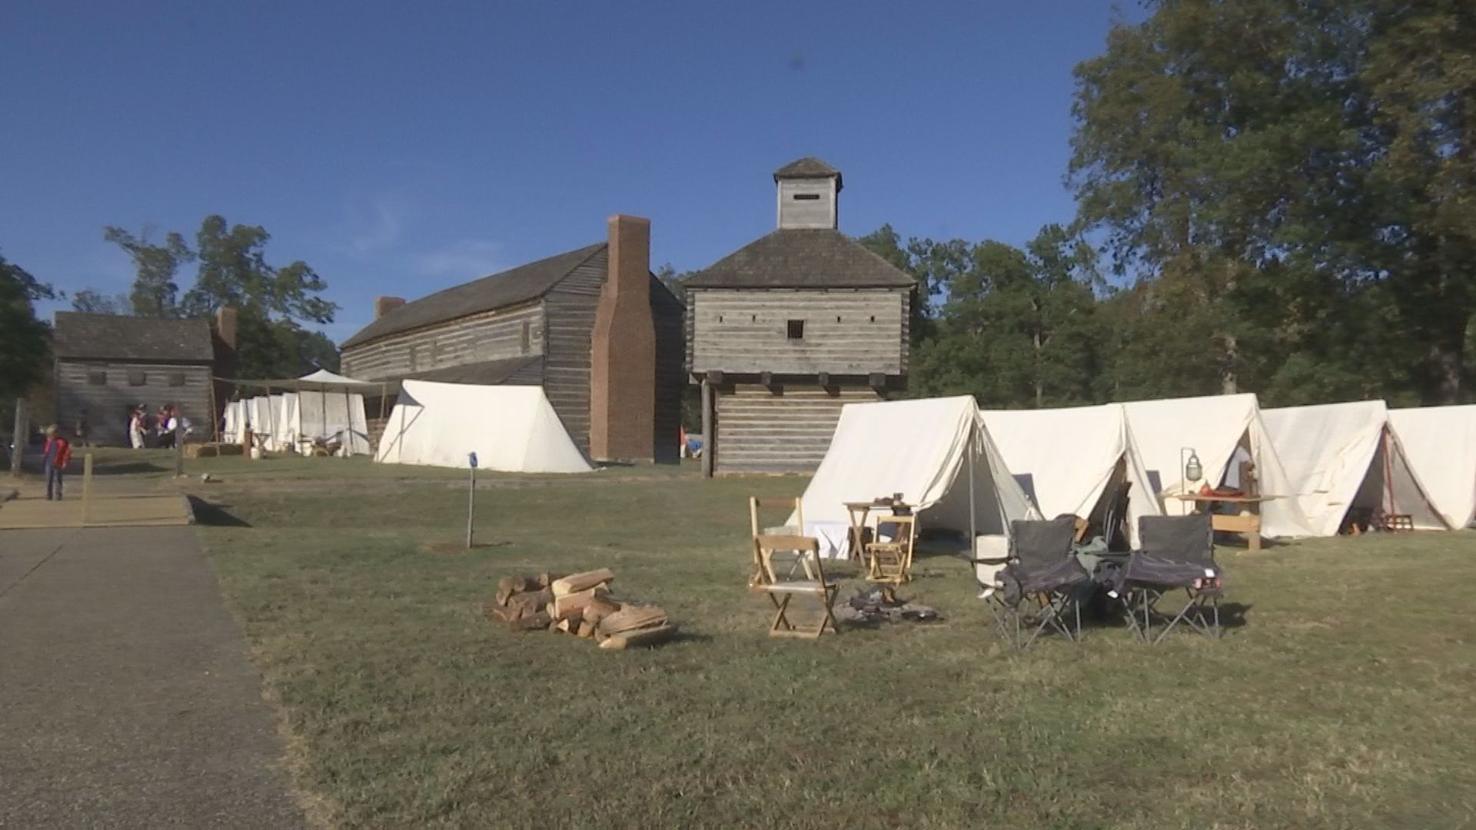 Fort Massac Encampment festival returns to show life in the 1700s